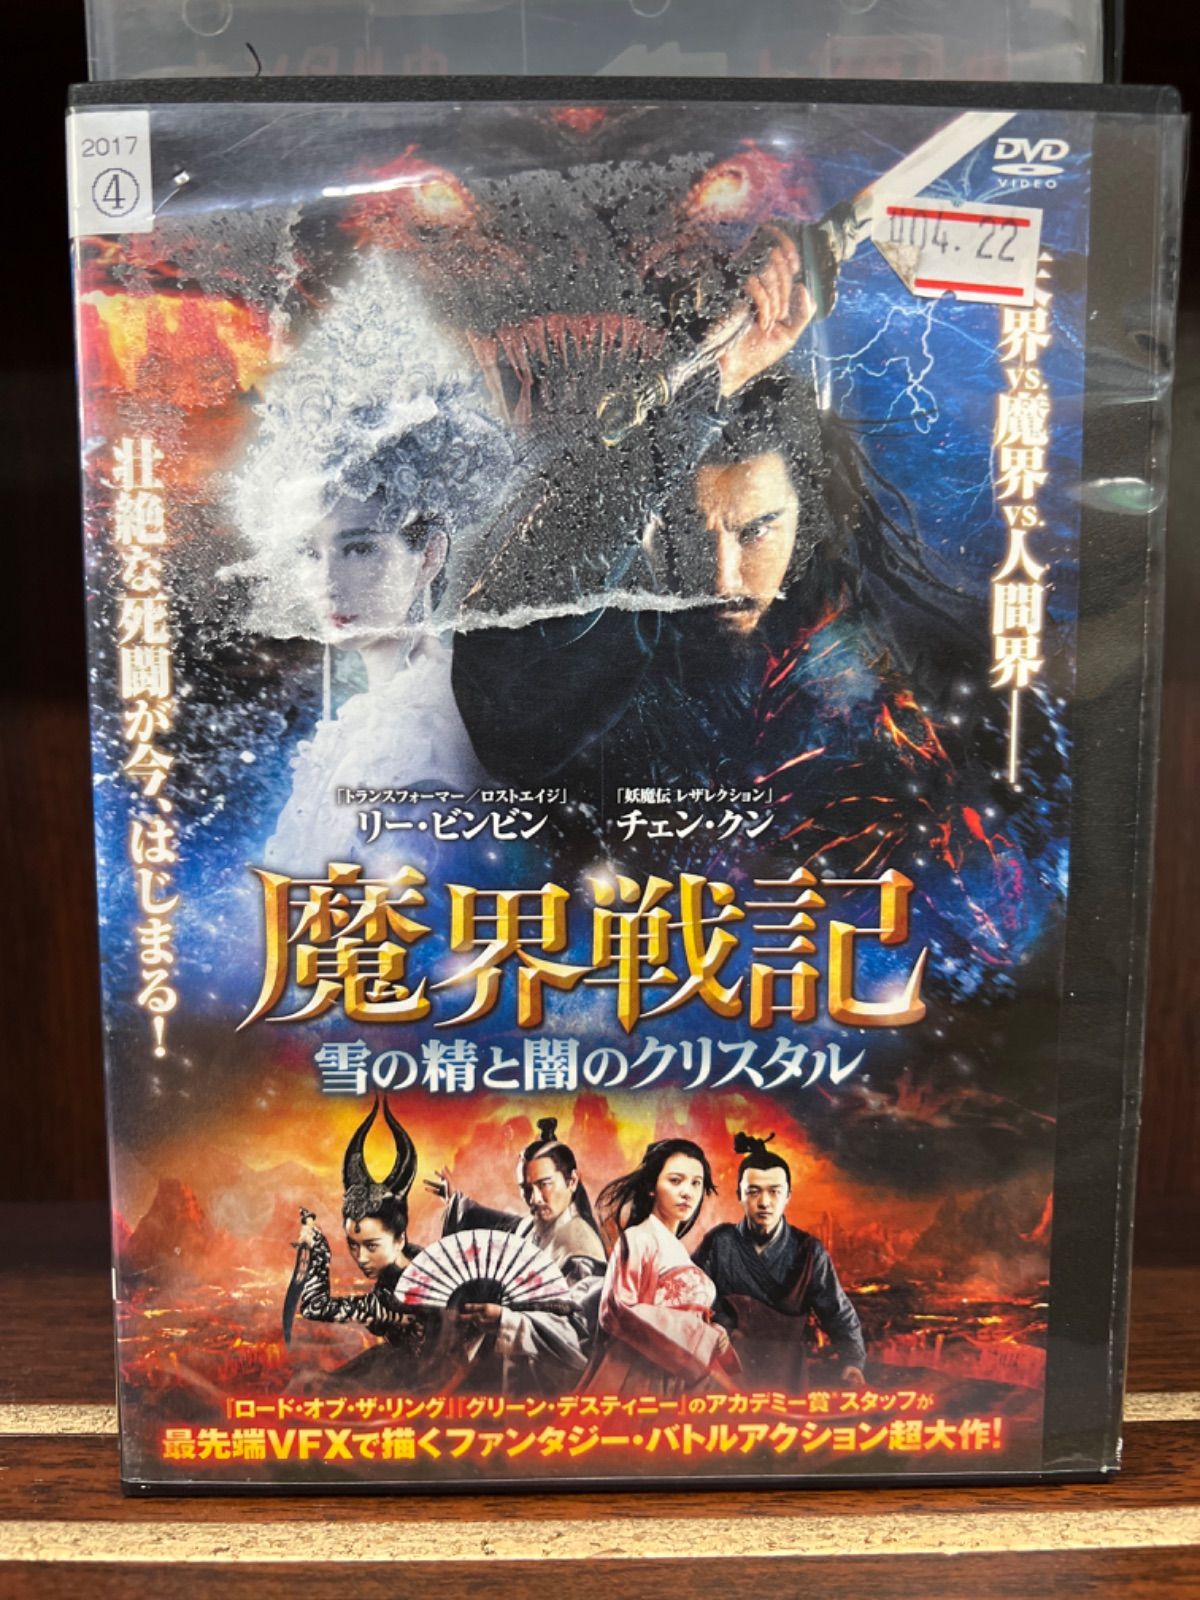 DVD 魔界戦記 雪の精と闇のクリスタル - DVD